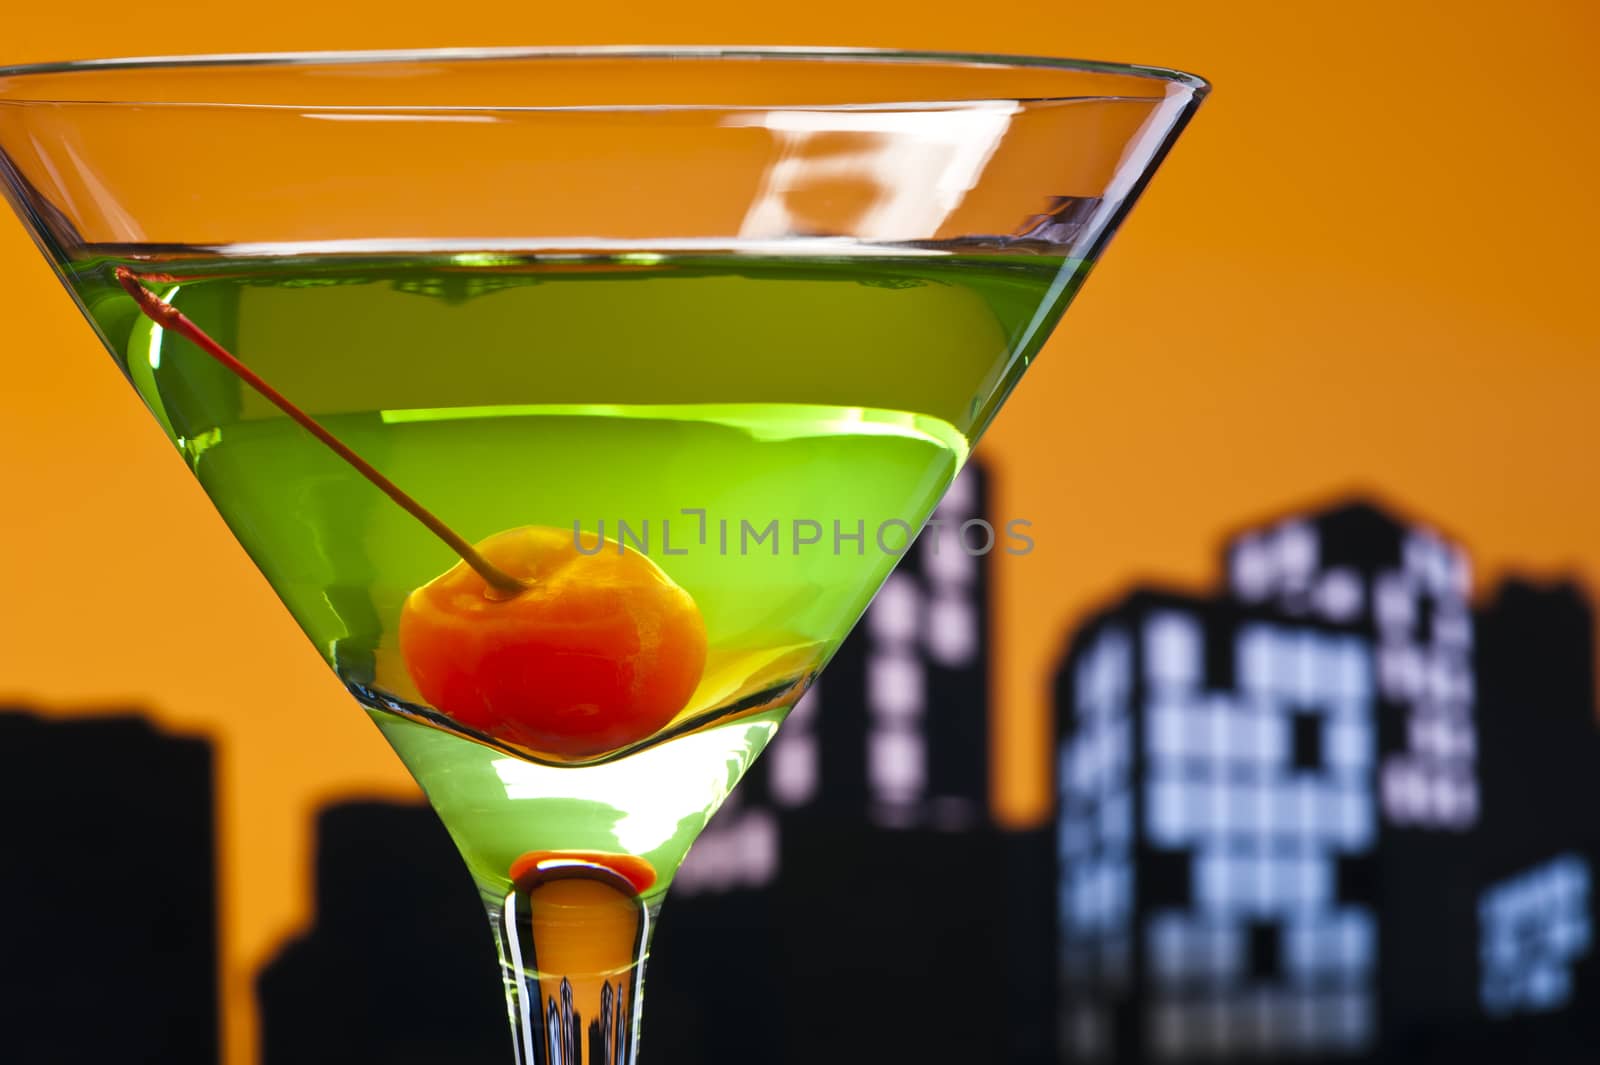 Metropolis Apple Martini by 3523Studio